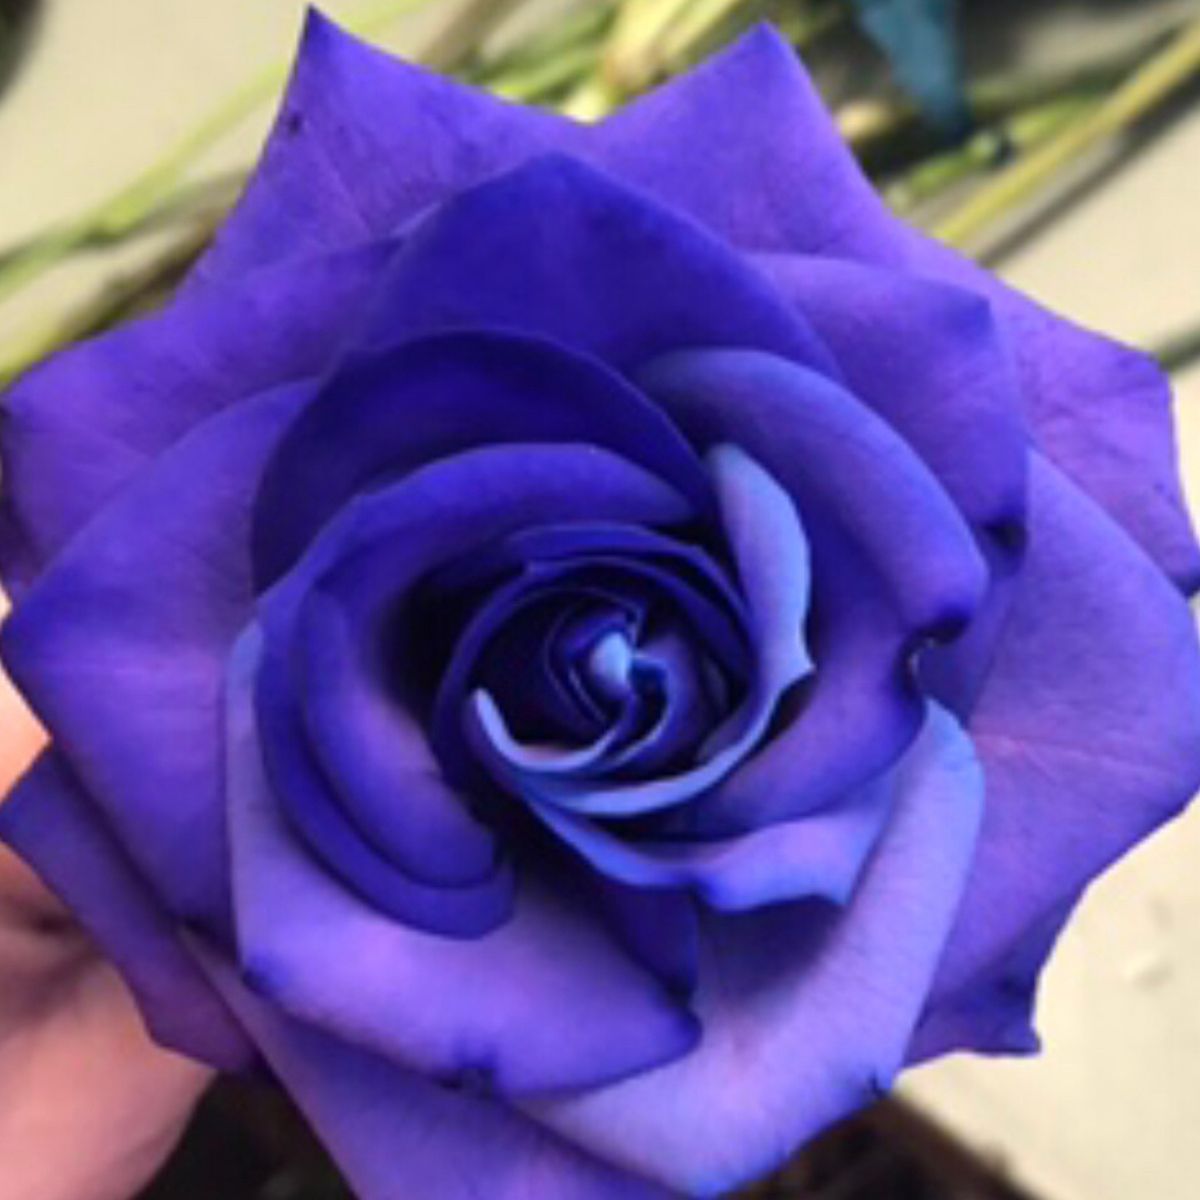 Kat Bass Violet Dyed Rose - on Thursd Highlighted